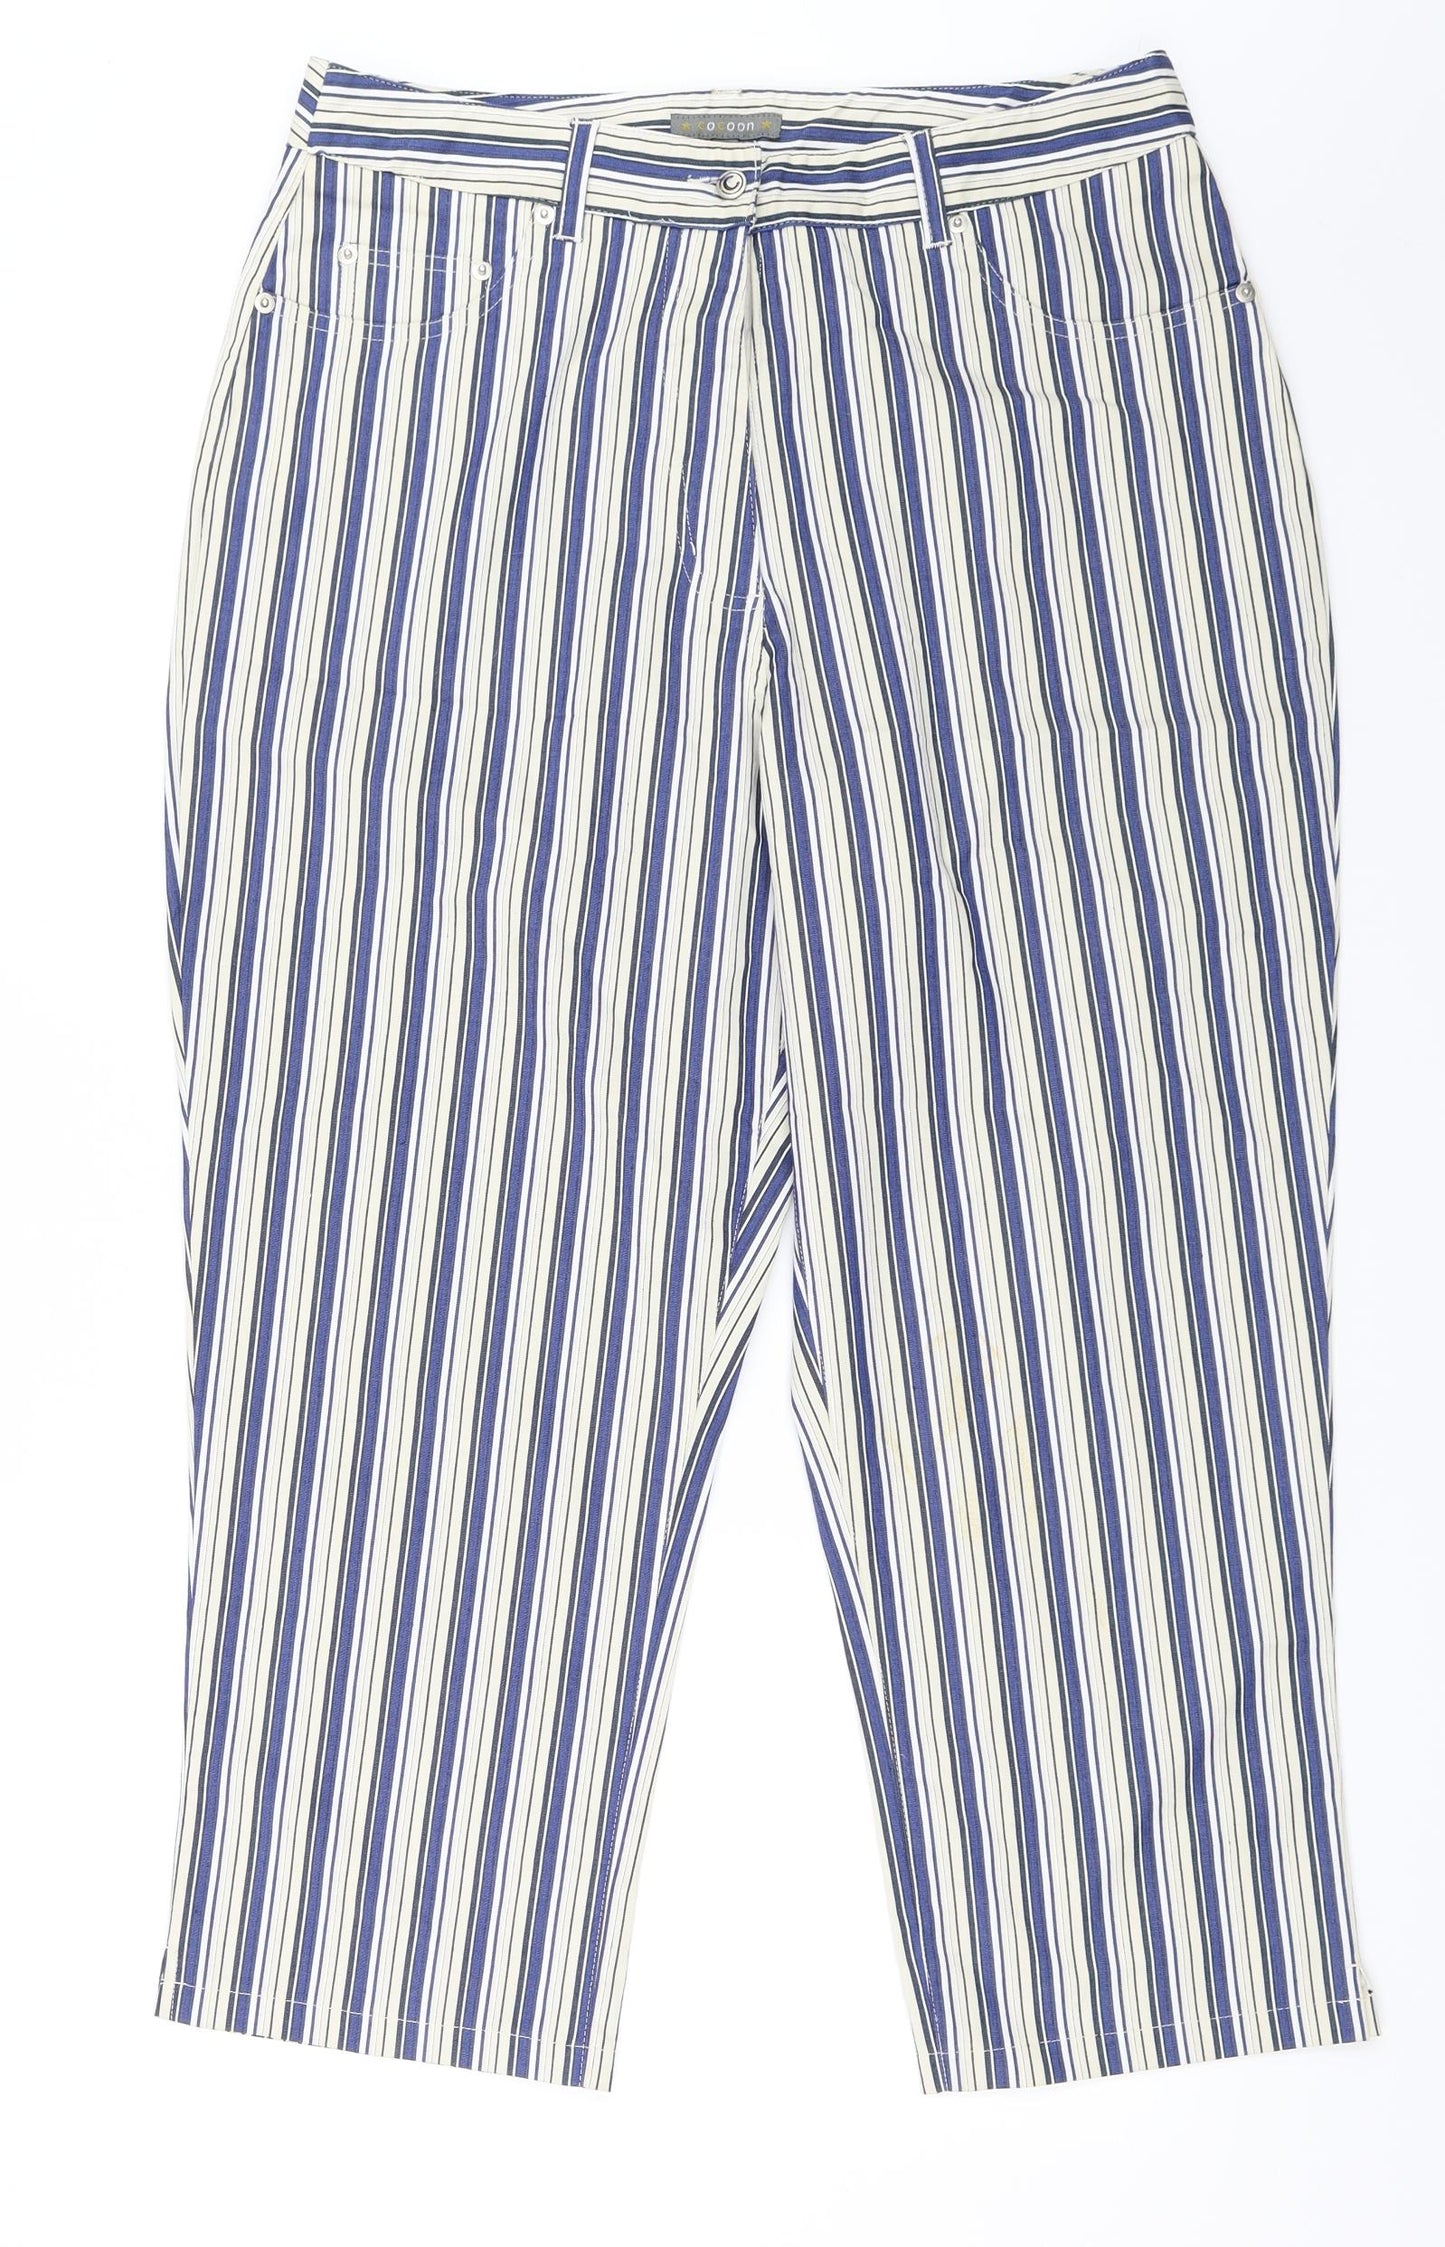 Cocoon Womens Beige Striped  Trousers  Size 16 L25 in